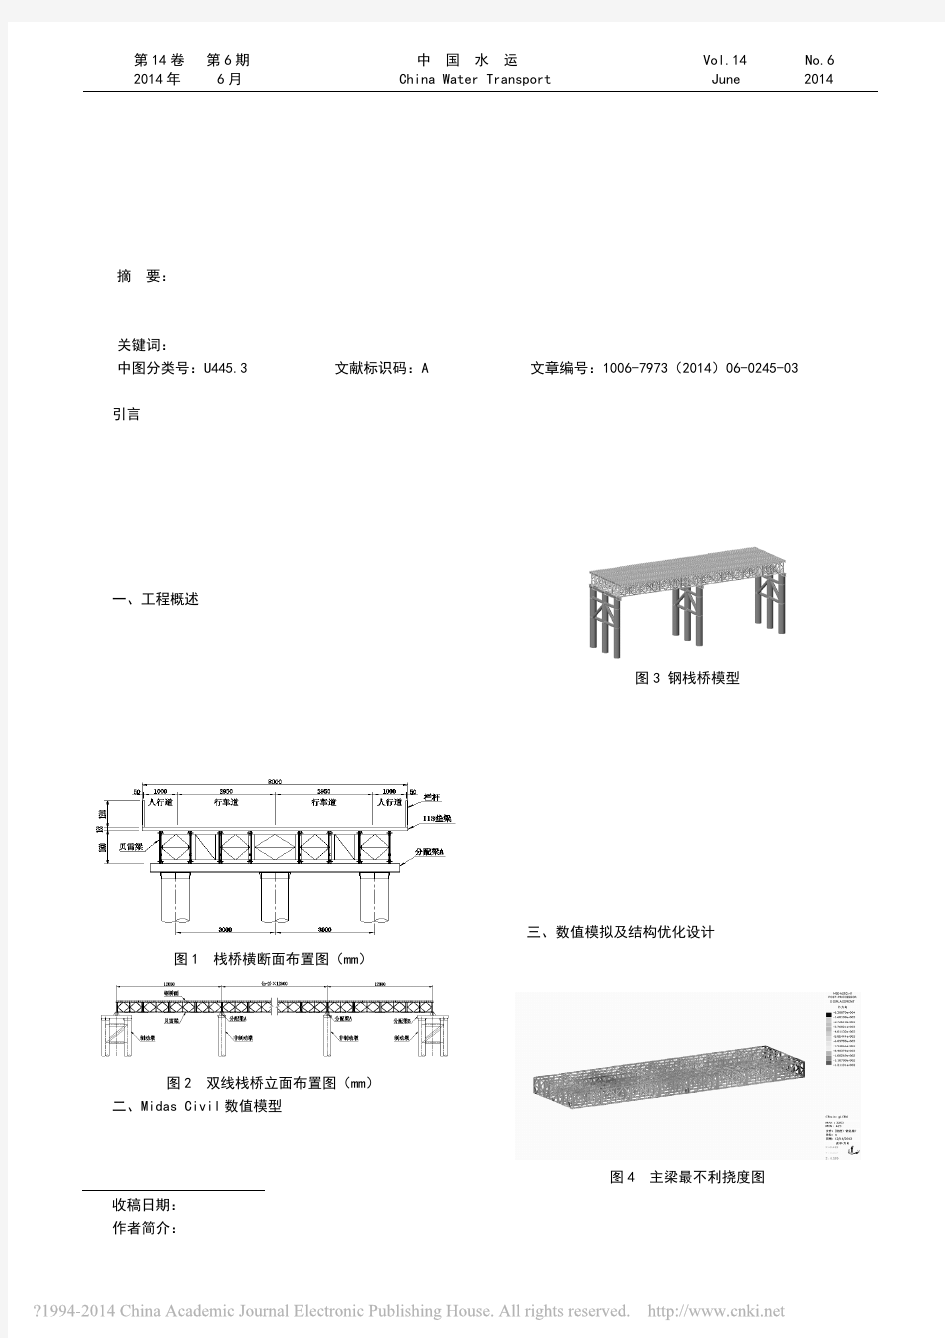 MIDAS_Civil在钢栈桥结构优化设计中的应用_刘强